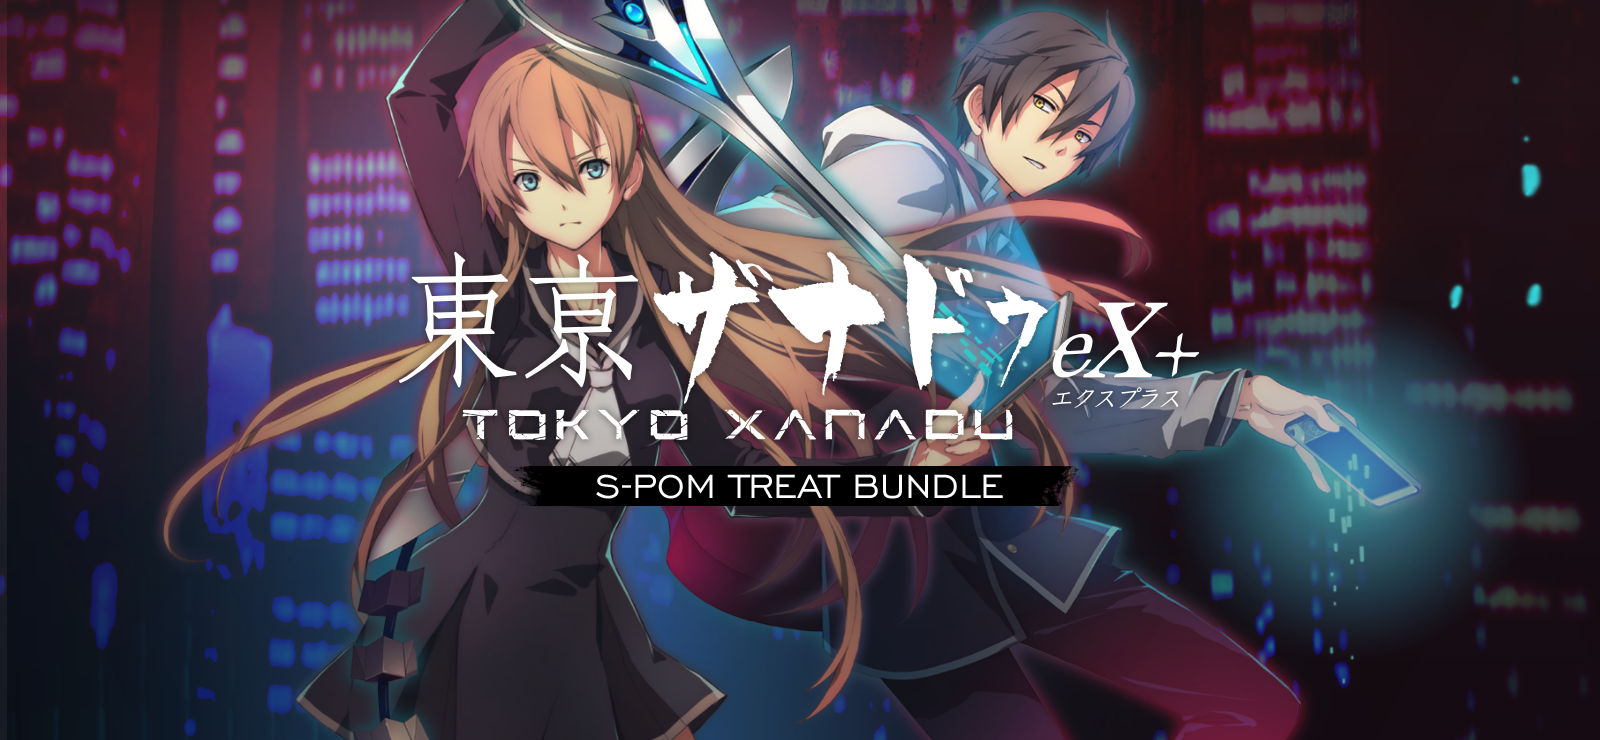 Tokyo Xanadu EX+ S-Pom Treat Bundle